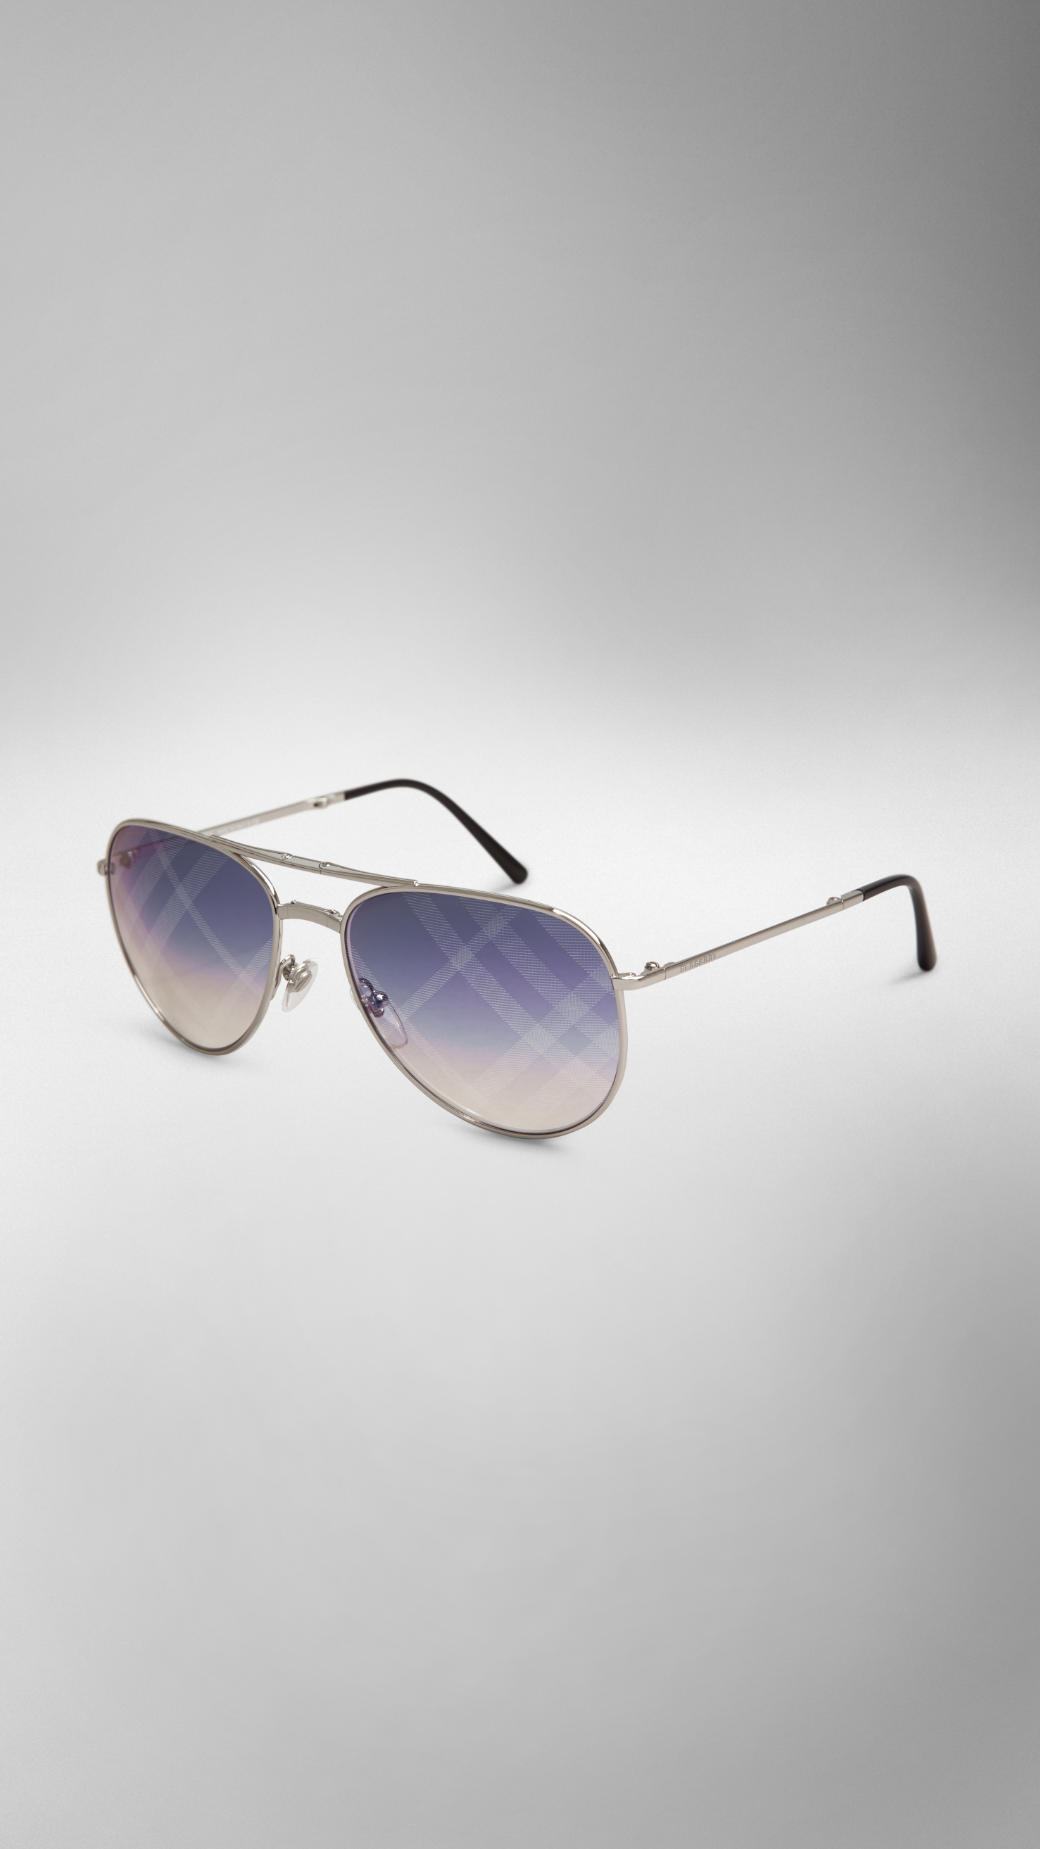 burberry foldable sunglasses